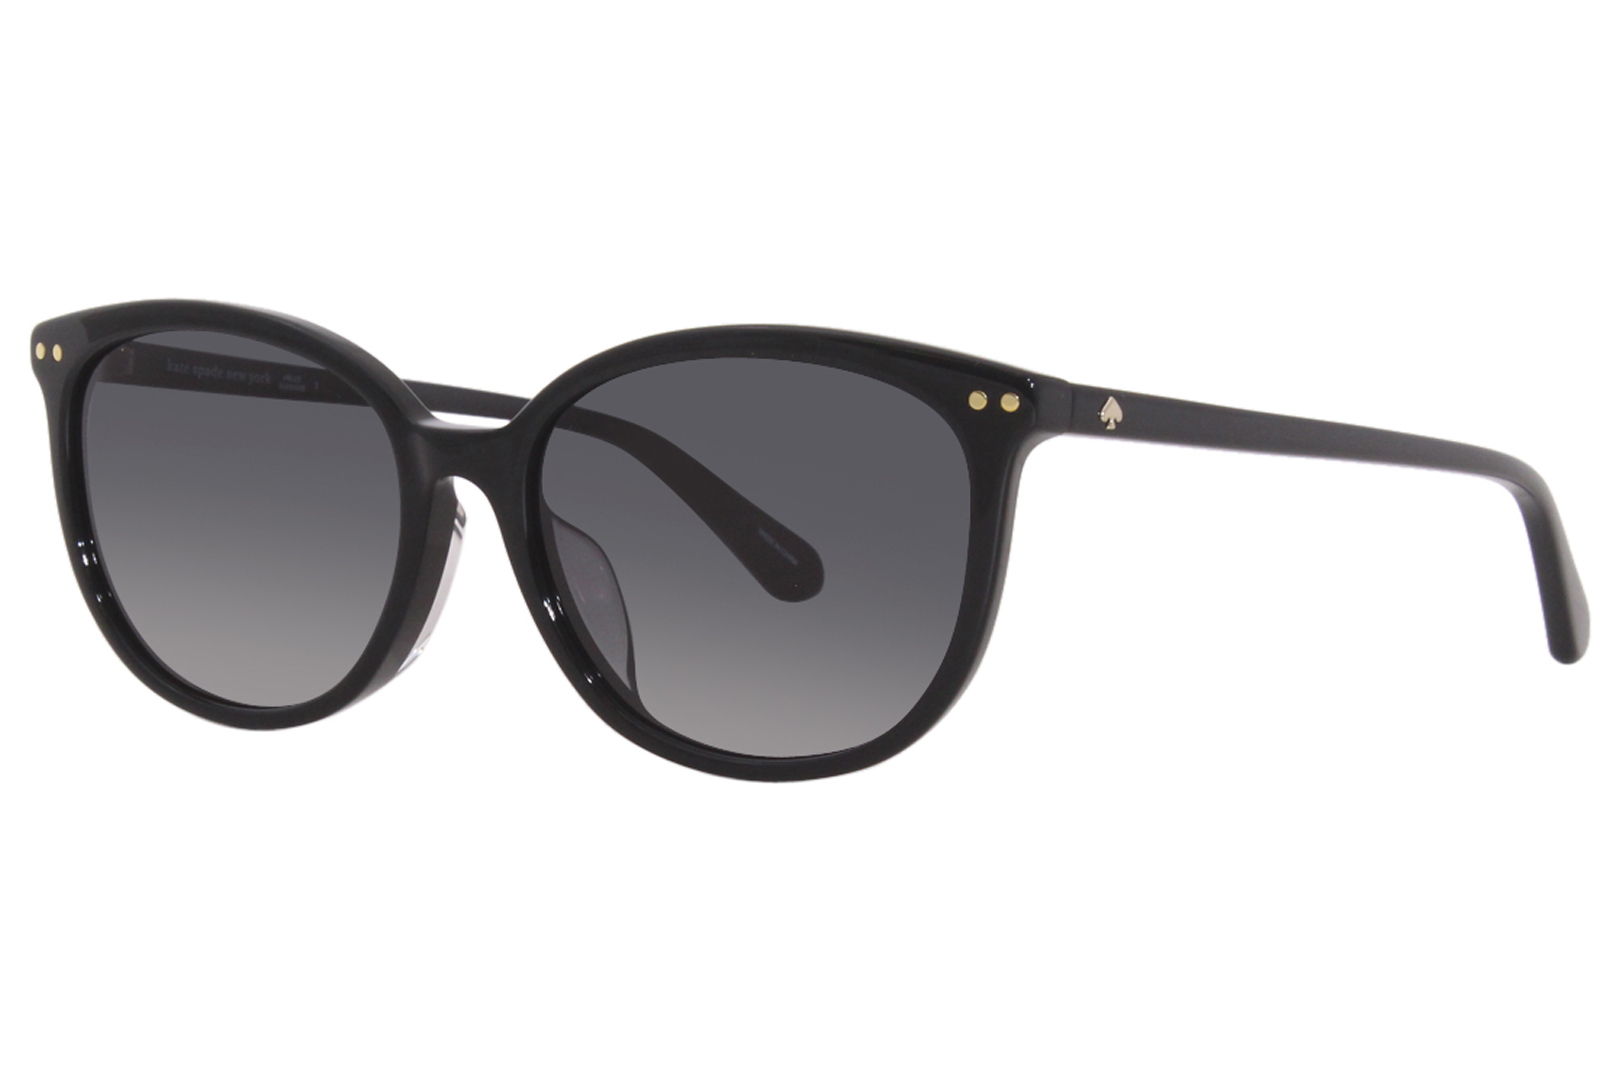 Kate Cat Eye Sunglasses, 55mm